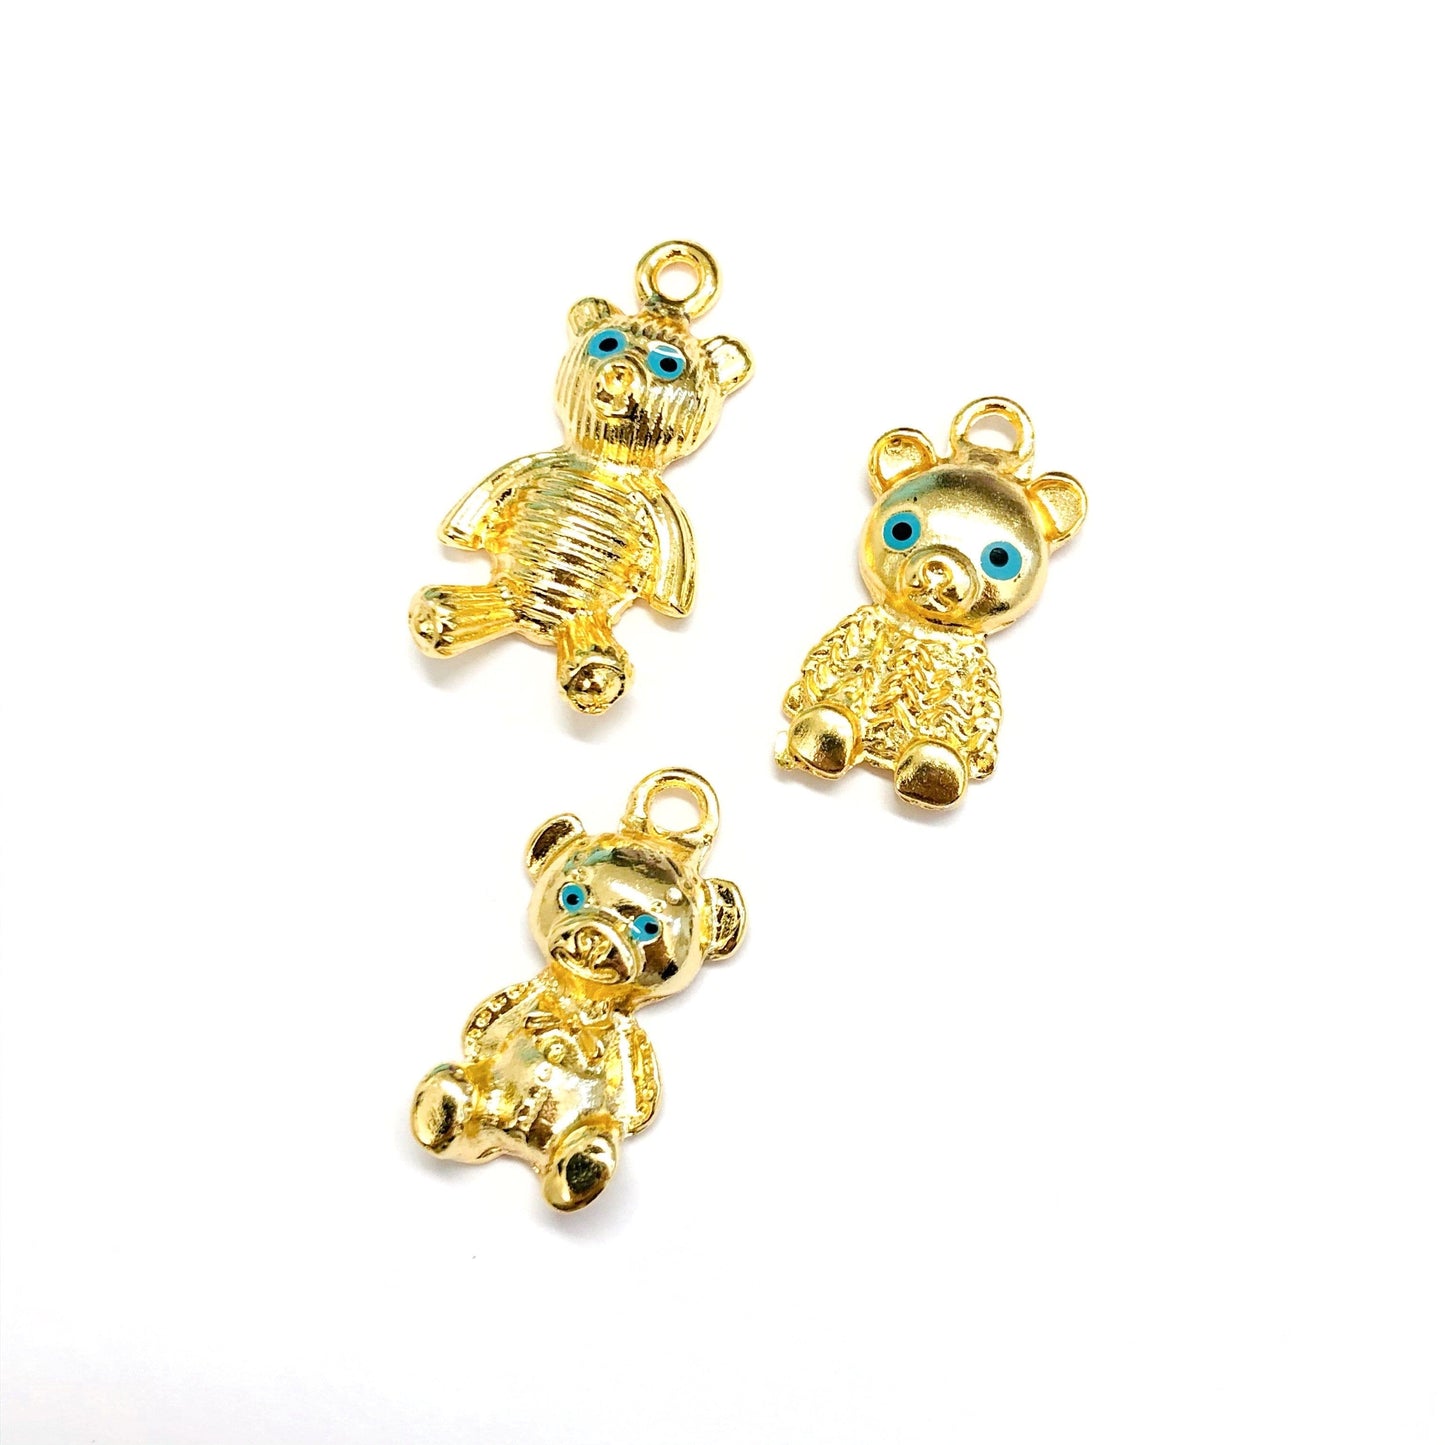 Vergoldetes Teddybär-Familienset – Vater, Mutter, Kind, blaues Auge